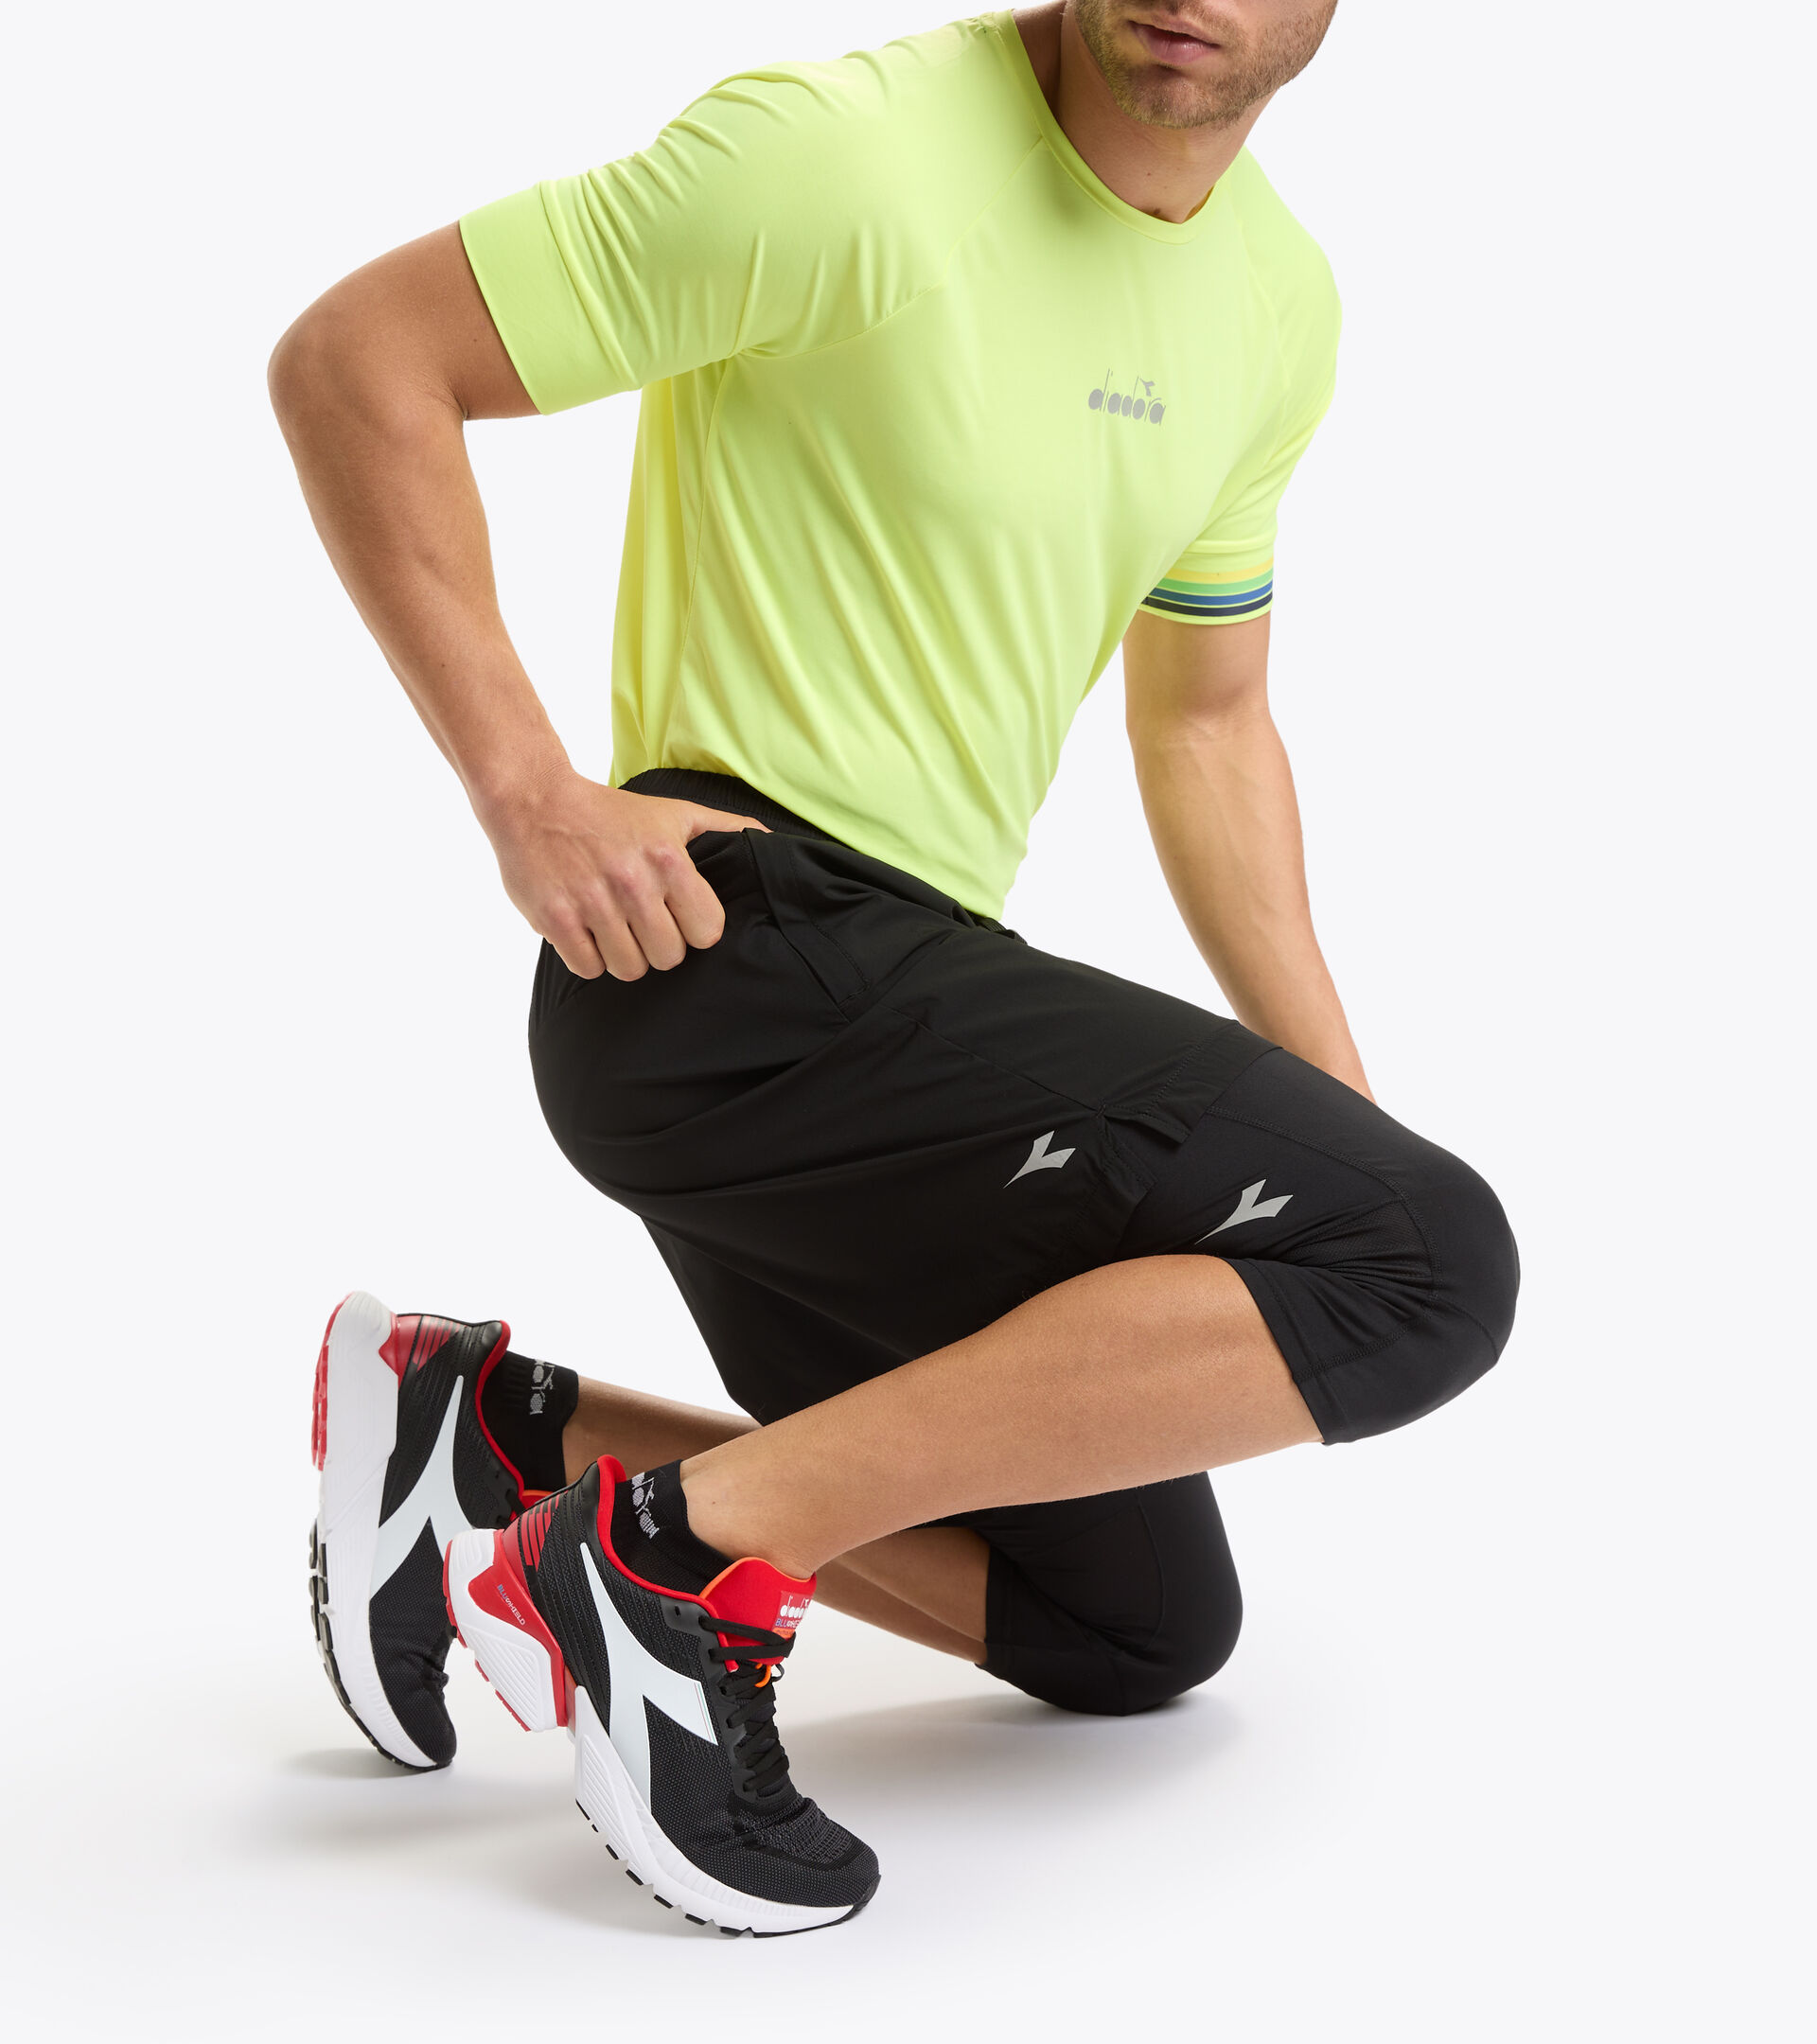 POWER SHORTS BE ONE Leggings running set Men GR - with detachable Diadora Online shorts Store 